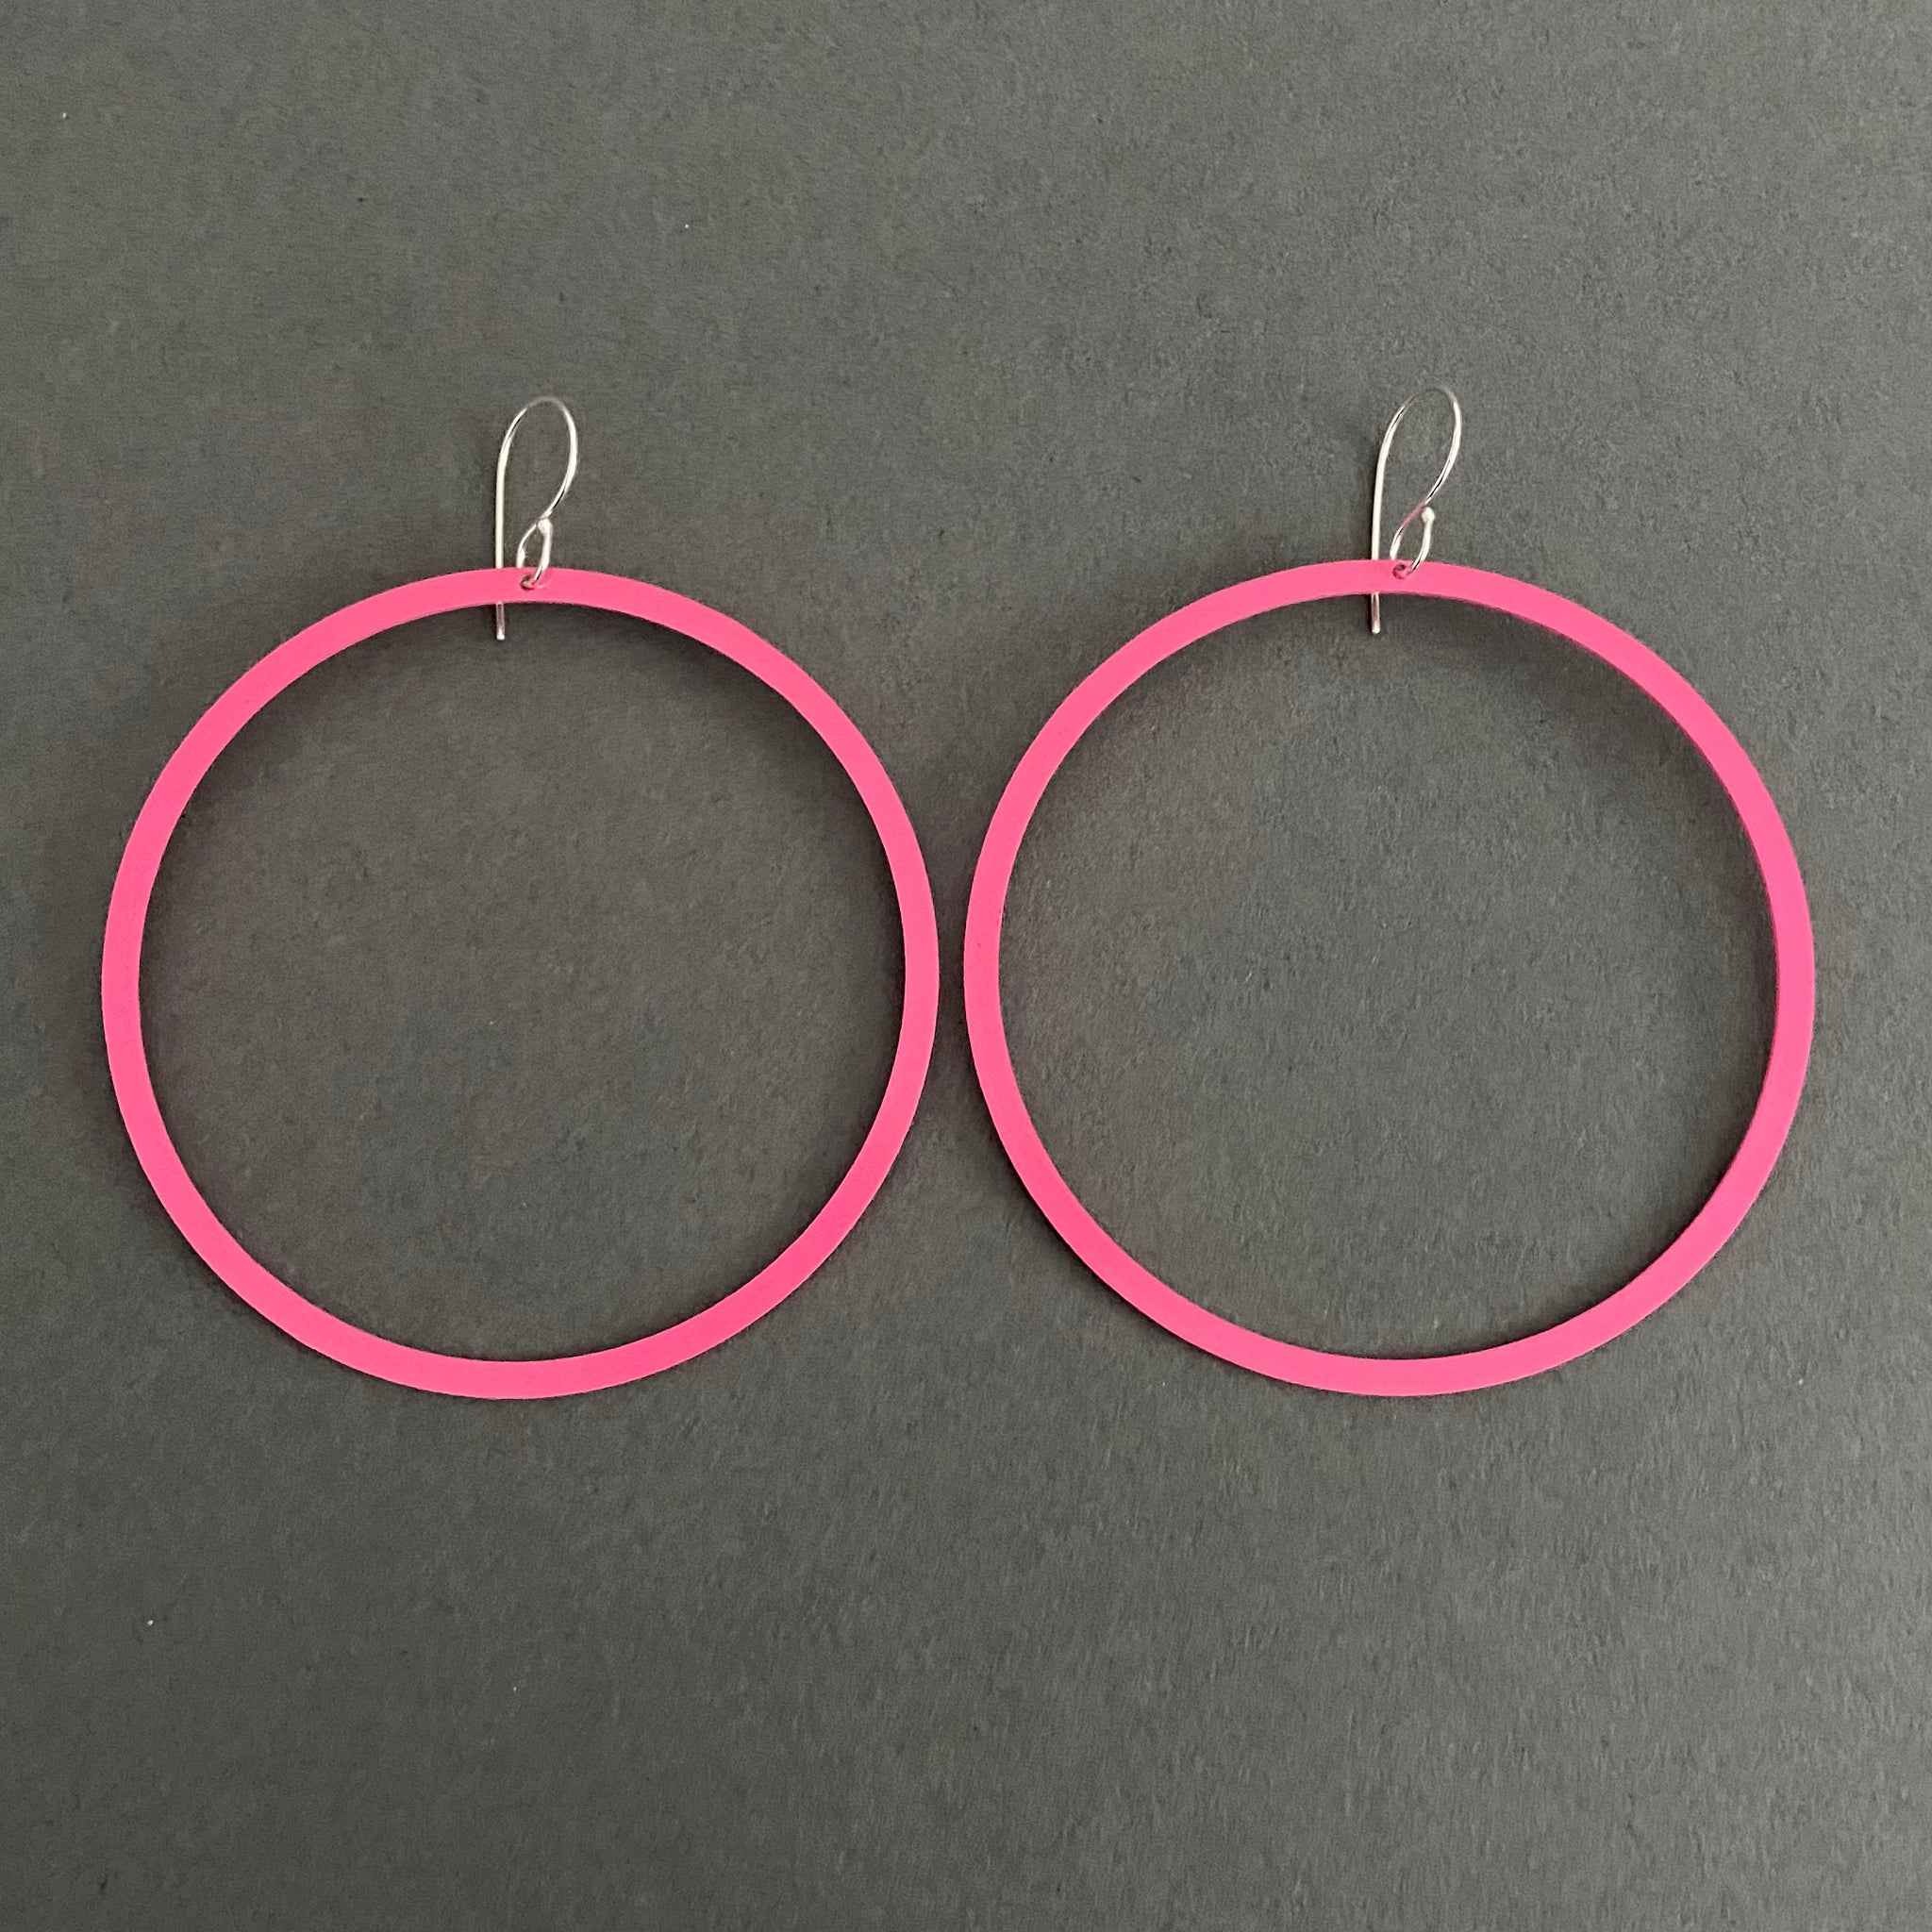 Bangle Earrings - Narrow, Sassy Pink